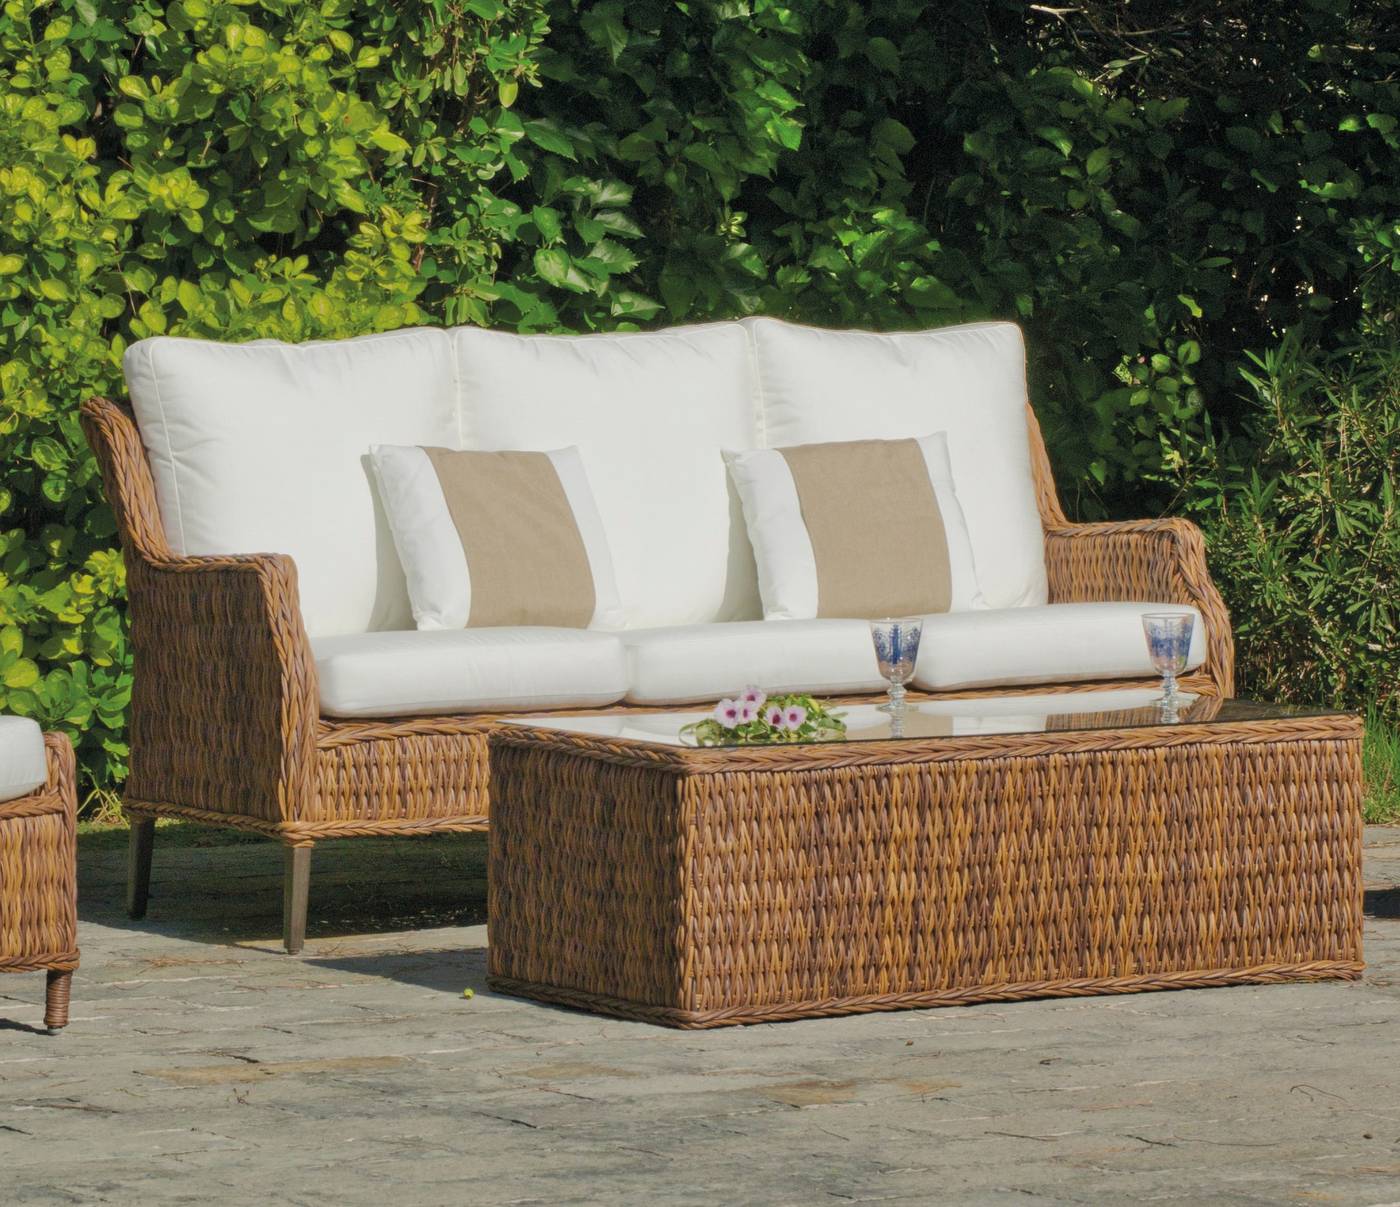 Set Médula Luxe Panama-10 - Conjunto de médula sintética lujo para jardín. Formado por: 1 sofá de 3 plazas + 2 sillones + 1 mesa de centro + 2 reposapiés + cojines